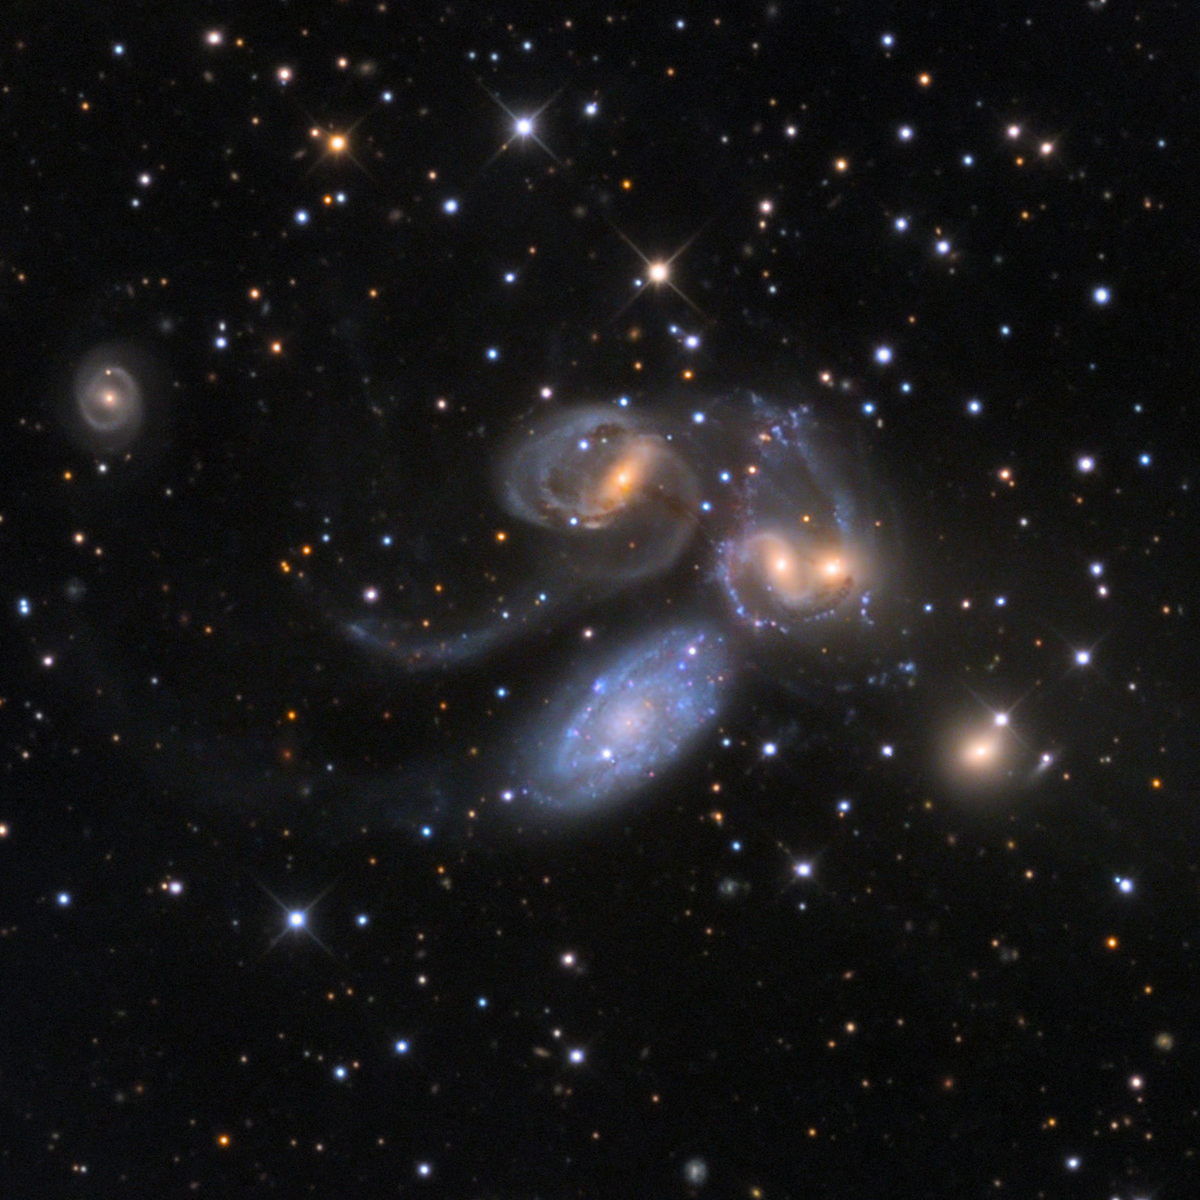 Stephan’s Quintet in Pegasus - Image Courtesy of Adam Block/Mount Lemmon SkyCenter/University of Arizona